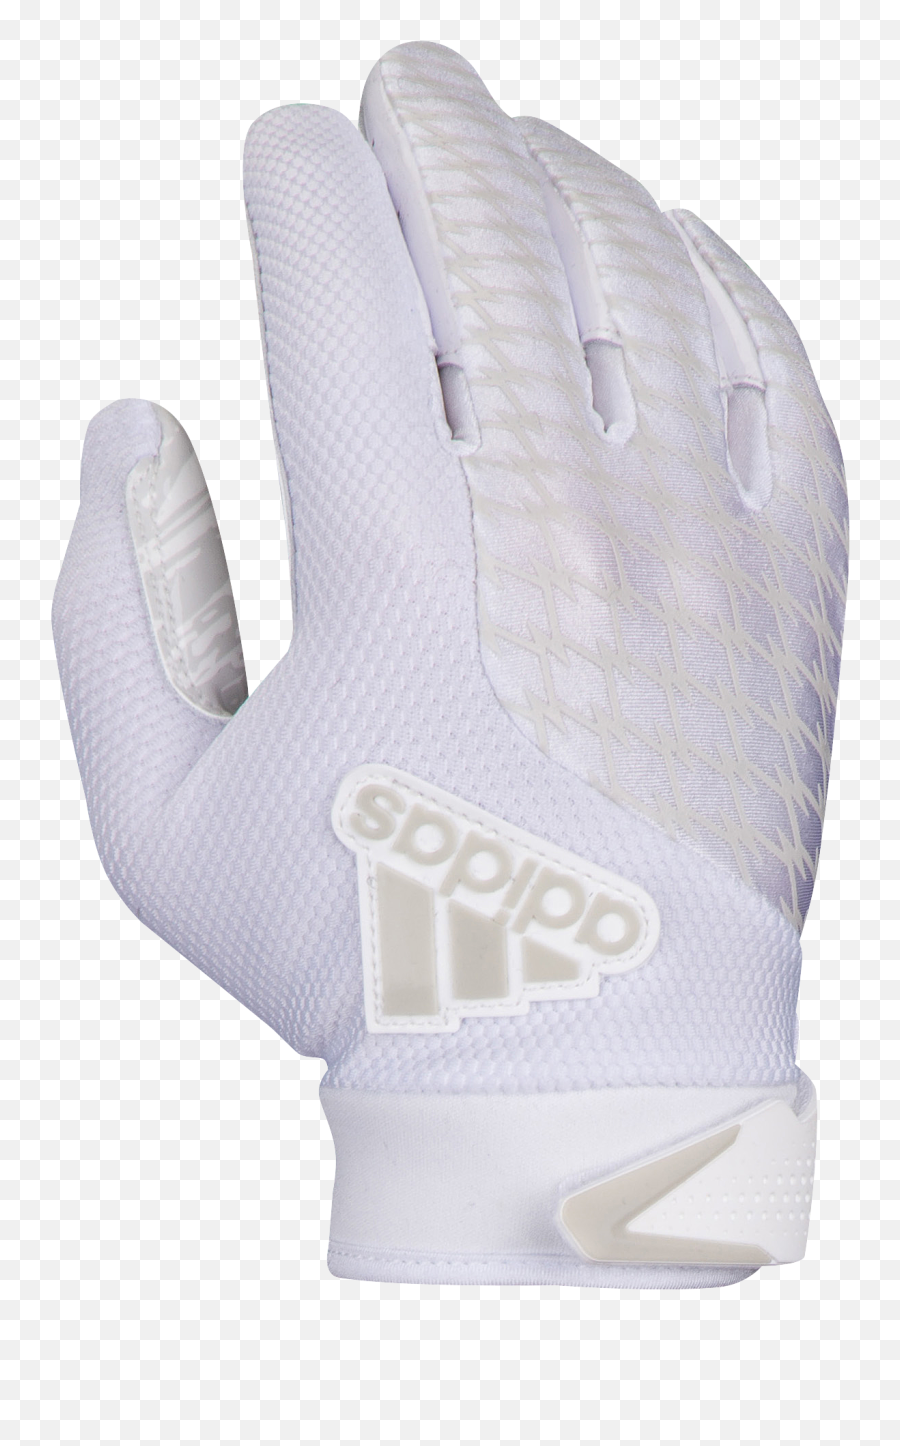 Adidas Football Gloves 70 Buy Clothes Shoes Online Emoji,Adizero 5-star 7.0 Cleats Emojis